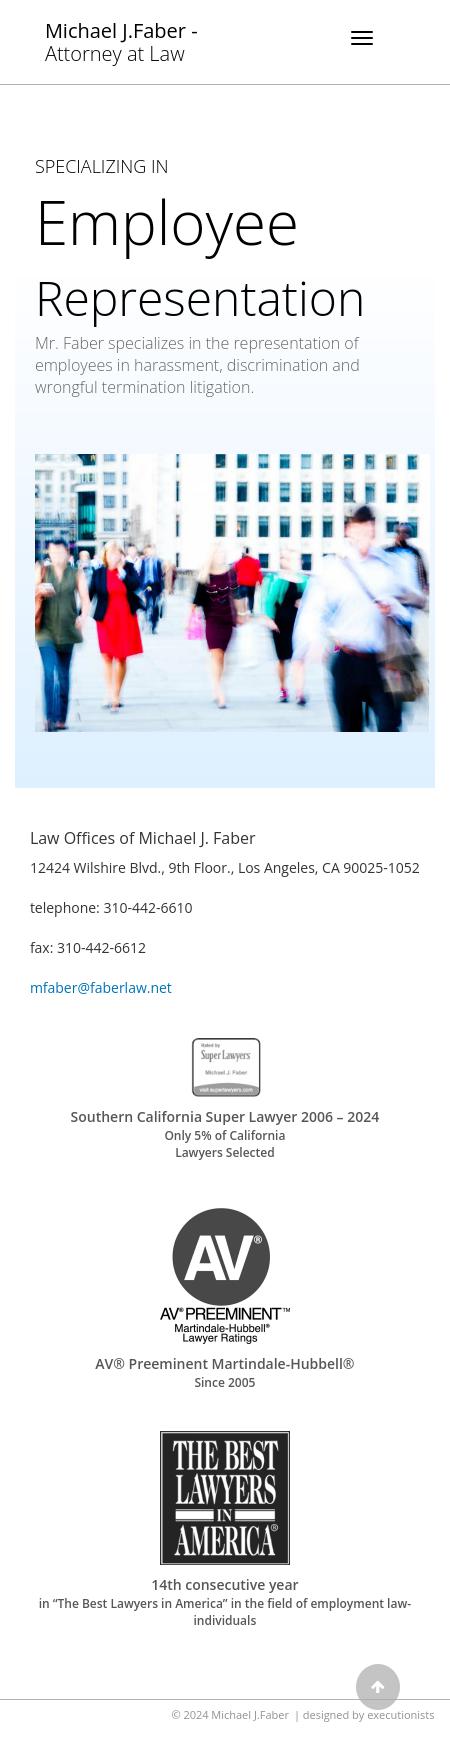 Michael J. Faber - Los Angeles CA Lawyers